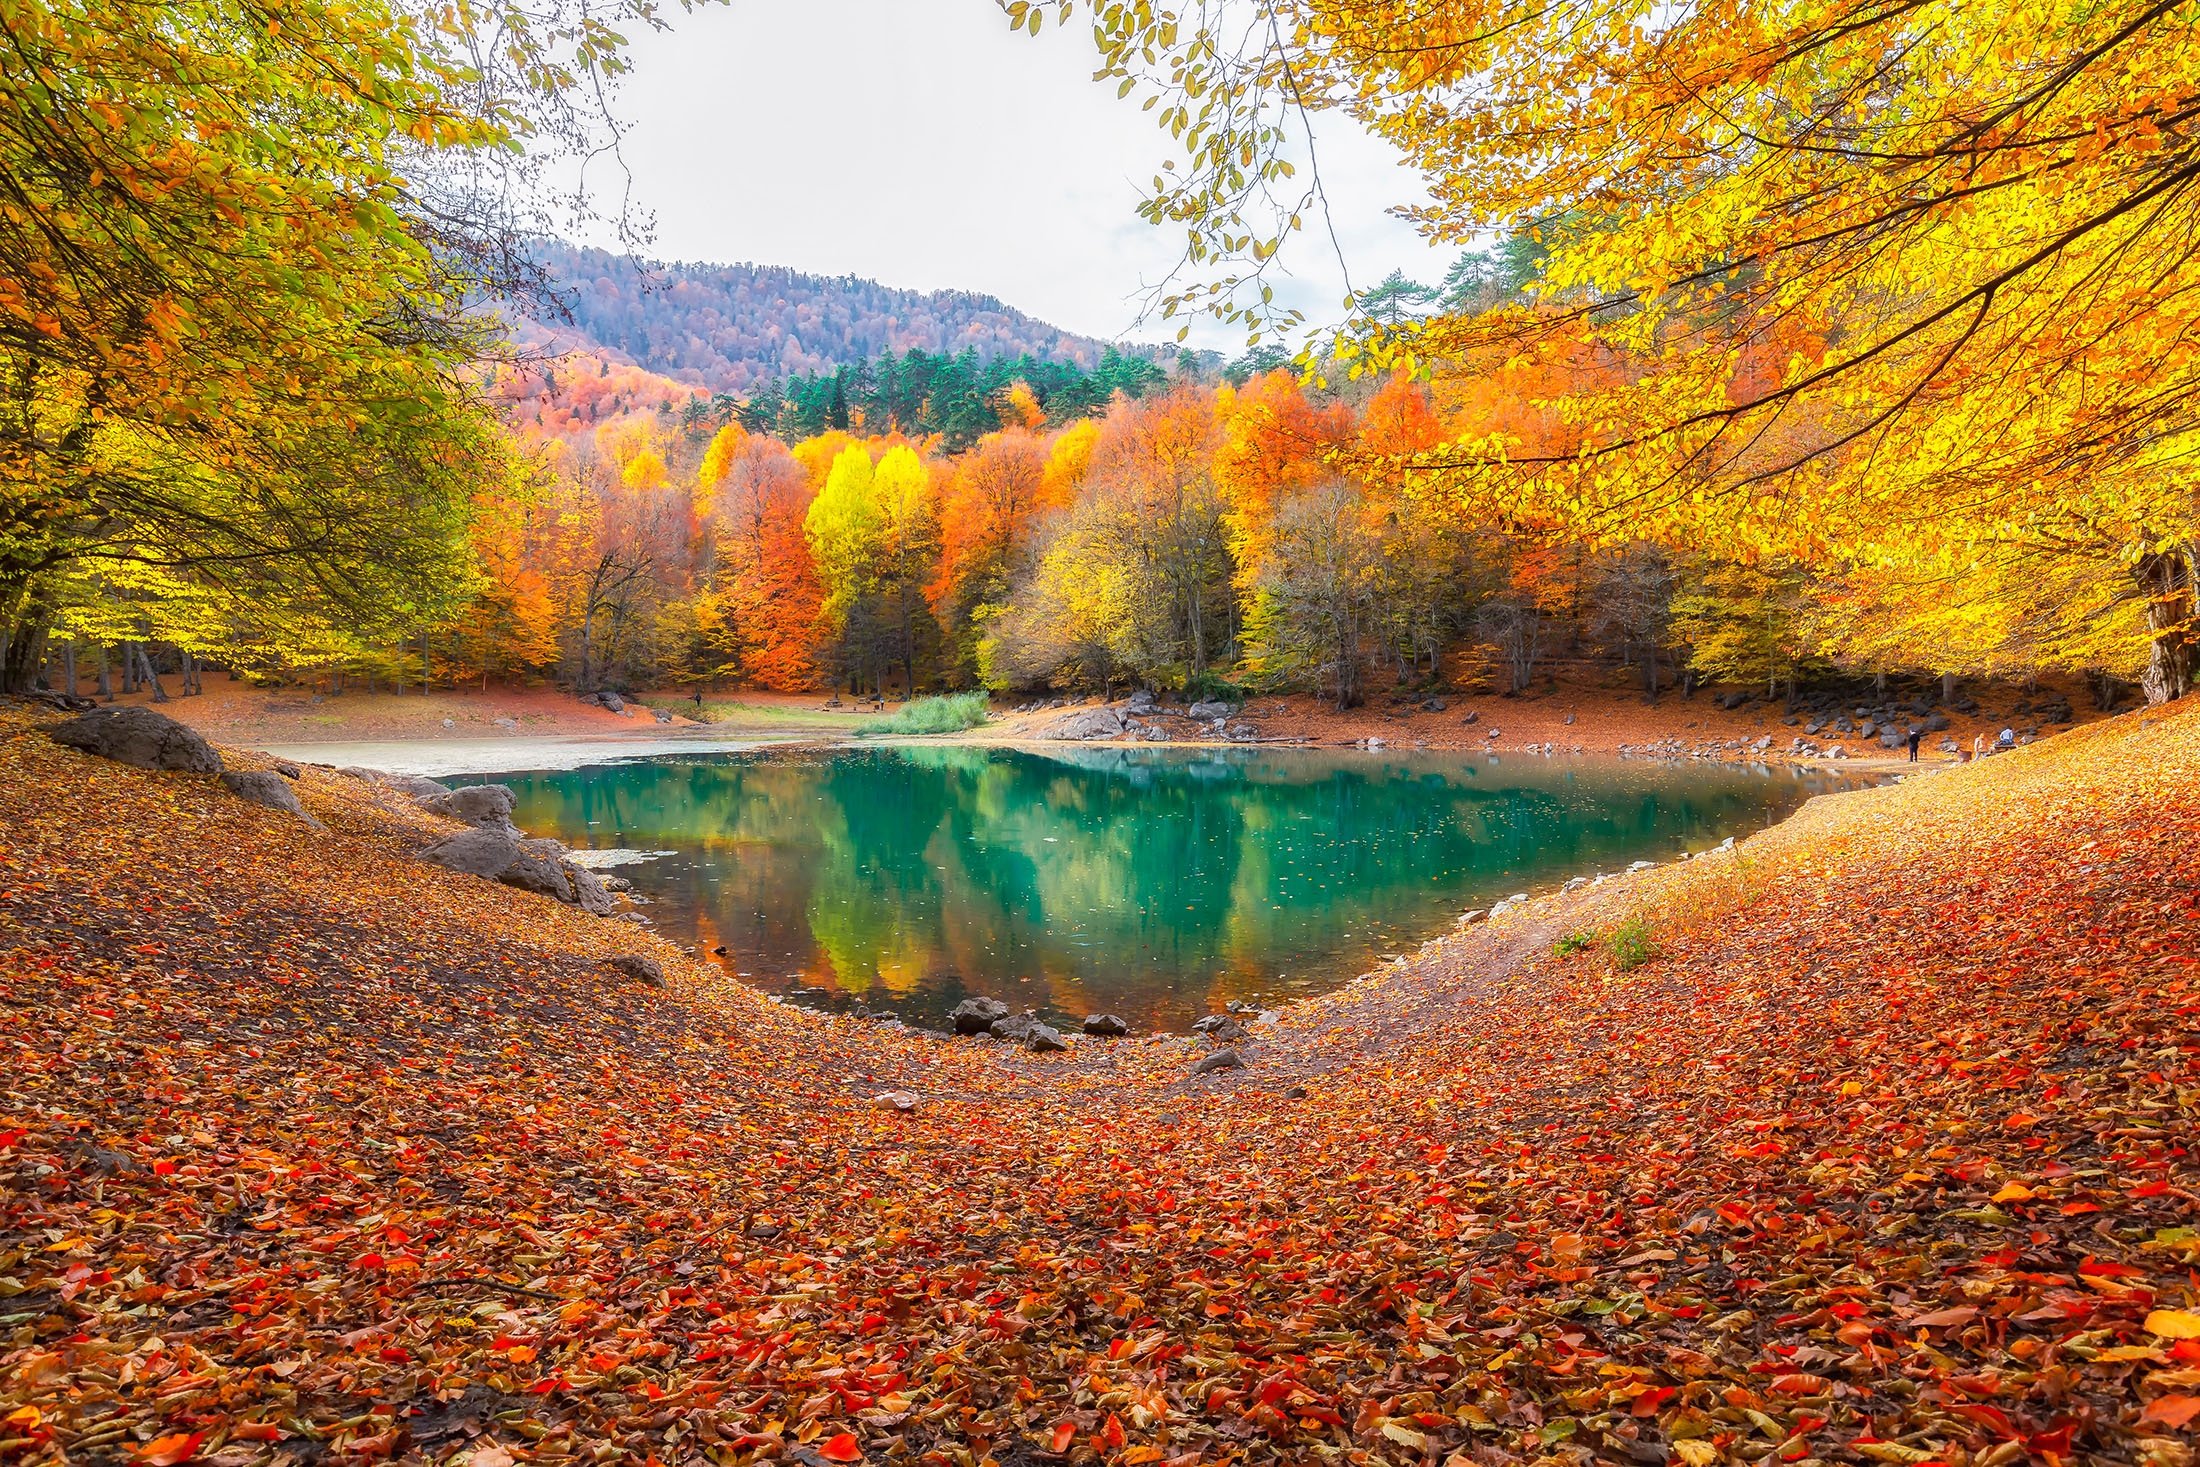 Yedigöller is a national park consisting of seven lakes, in Bolu, Türkiye. (Shutterstock Photo)